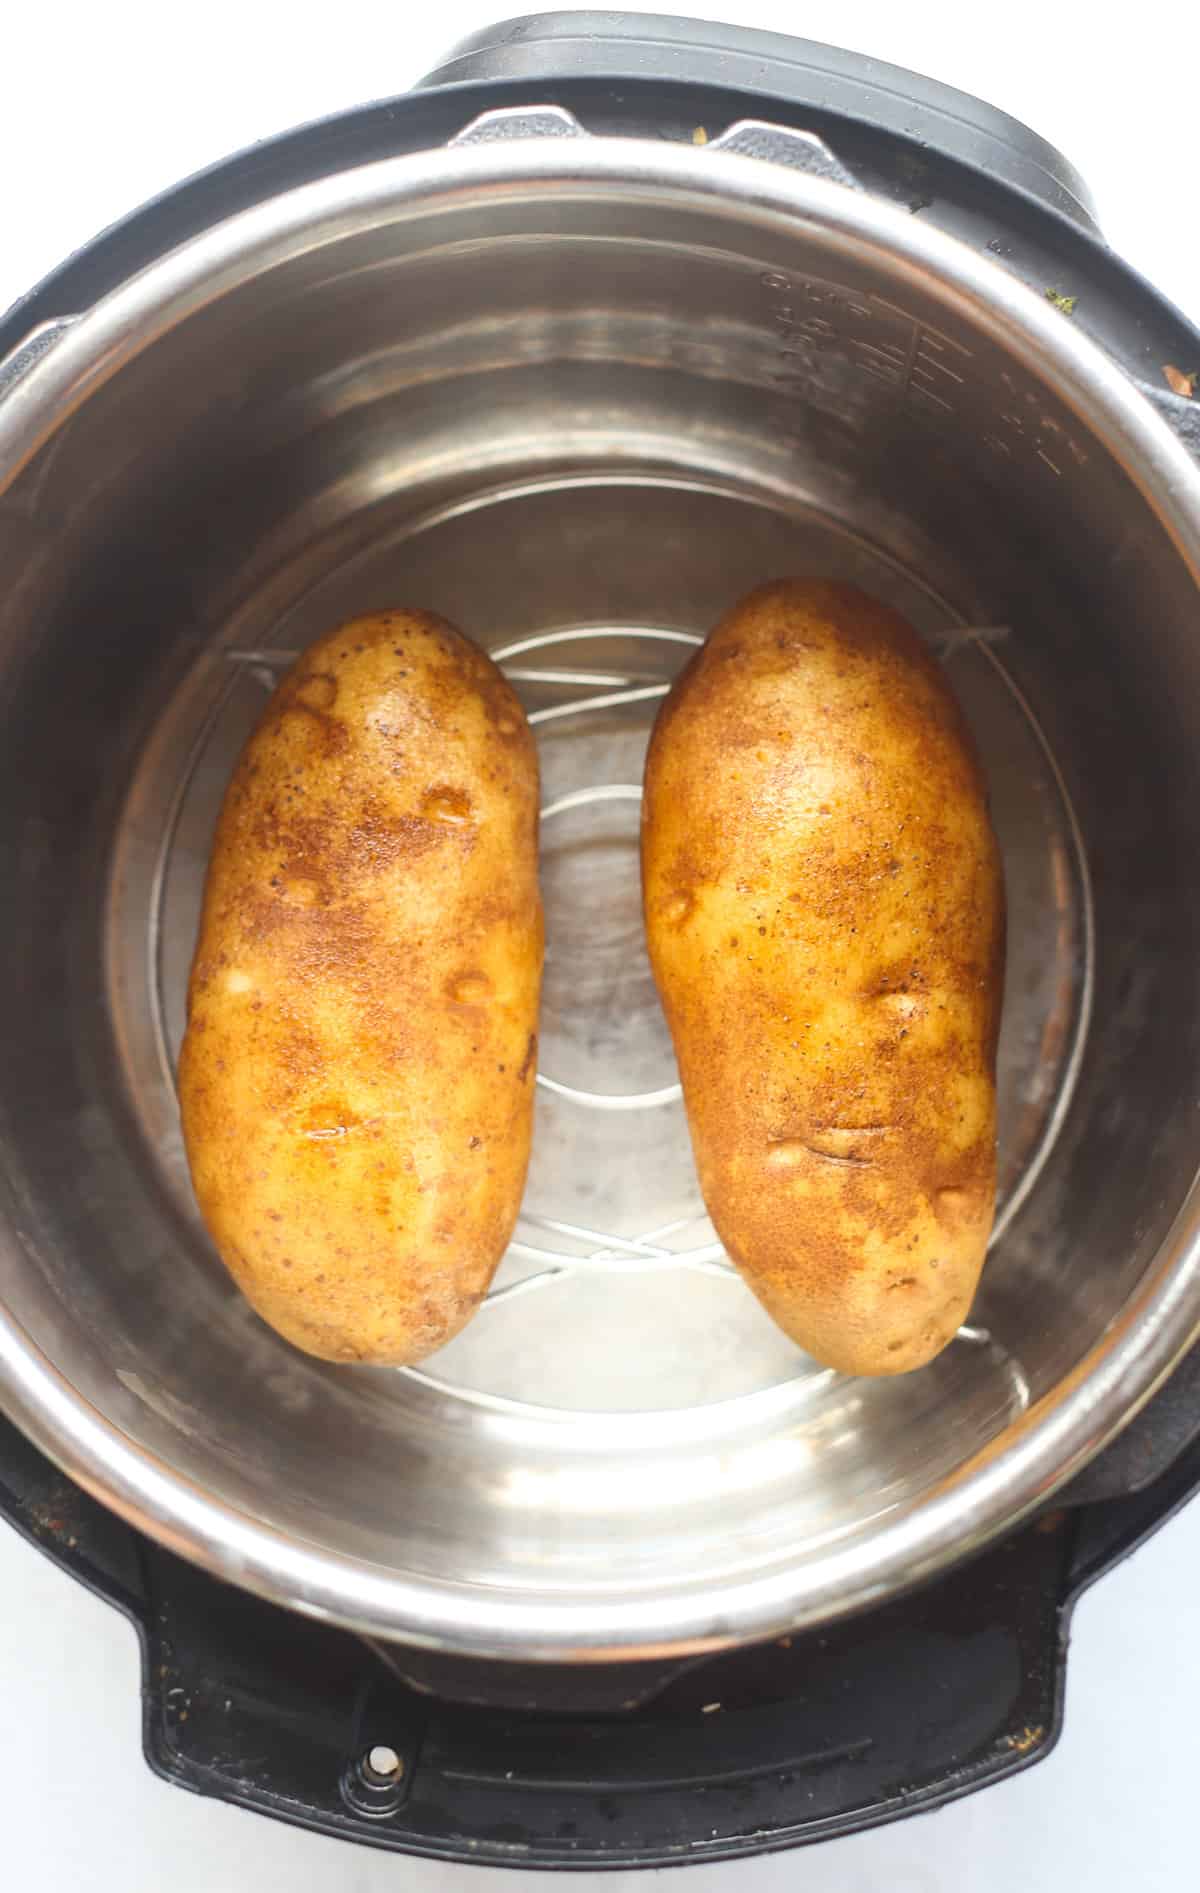 2 russet potatoes in an instant pot.